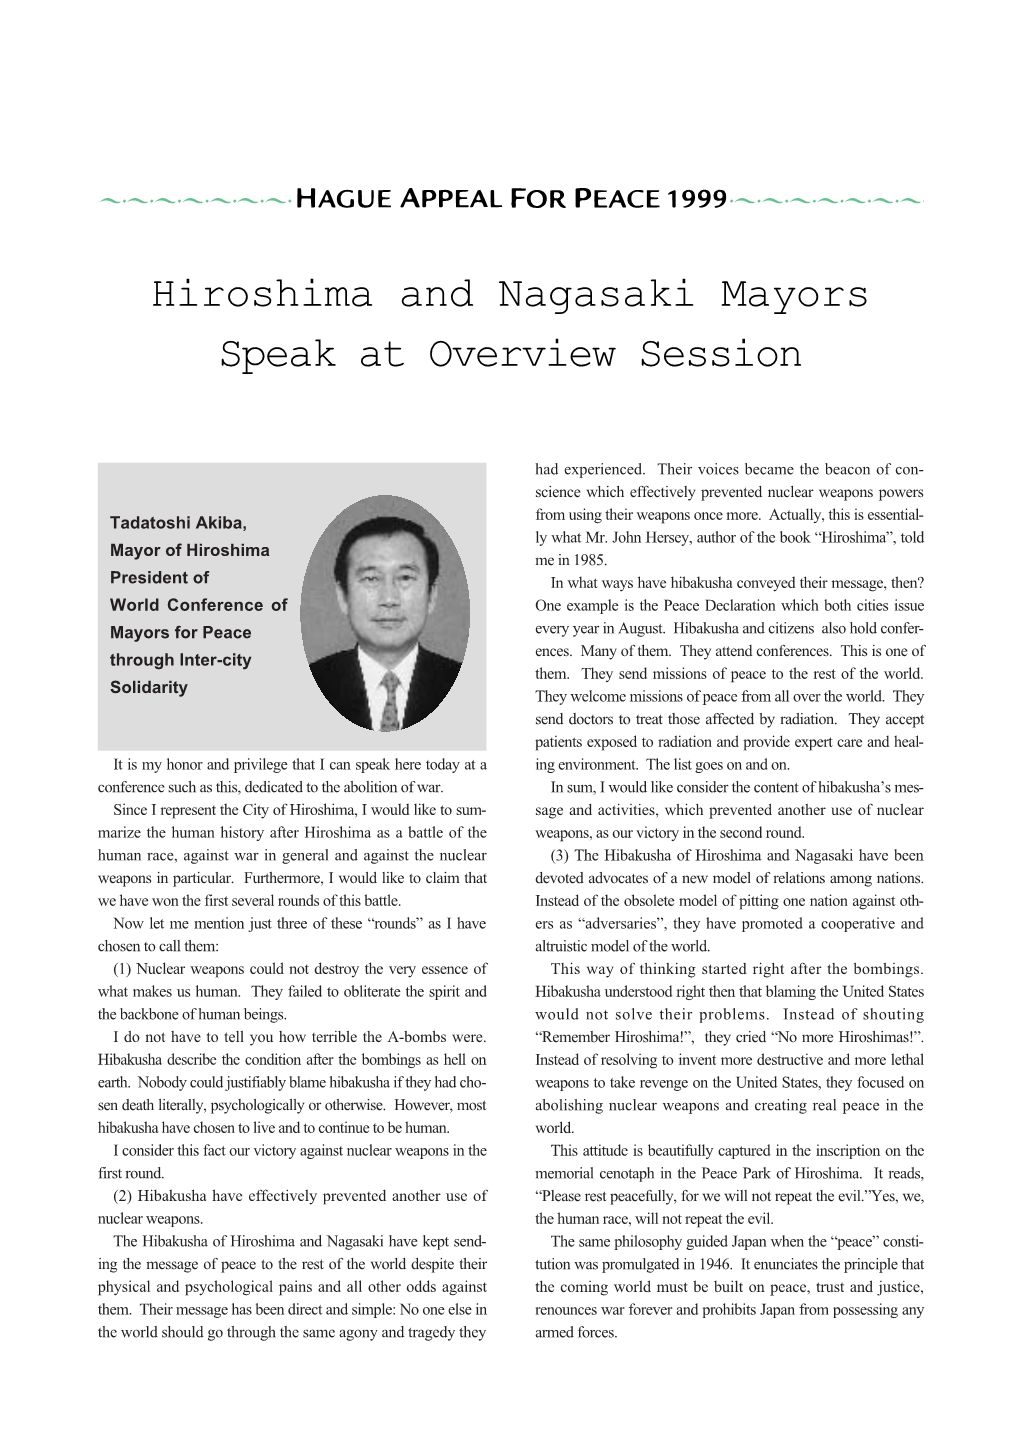 Hiroshima and Nagasaki Mayors Speak at Overview Session